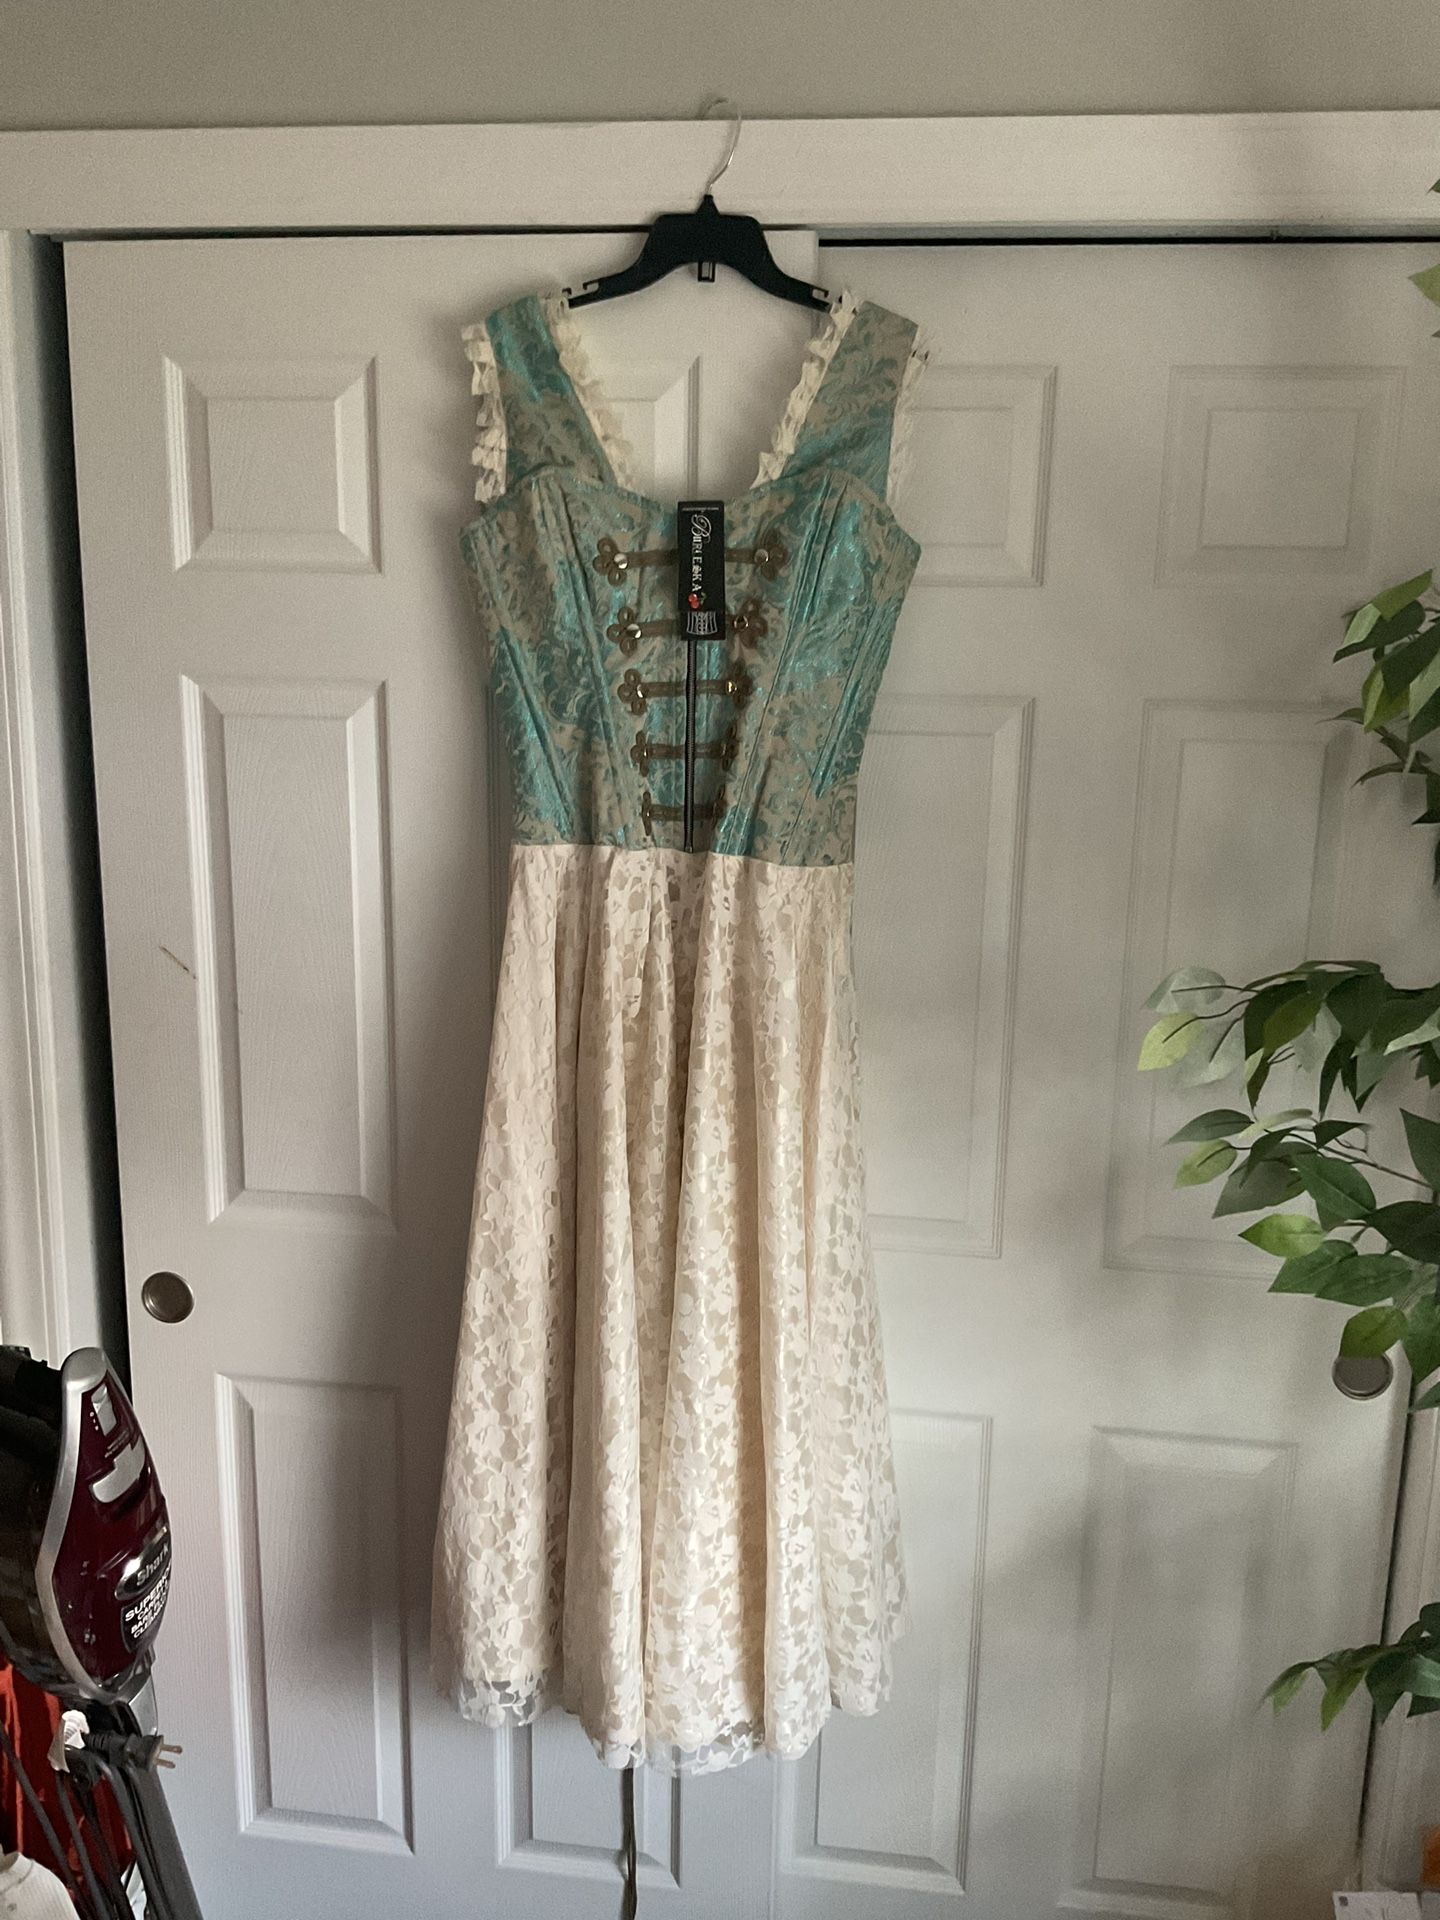 Burleska Corset Dress Victorian Steampunk Gypsy Renaissance Costume Turquoise / Cream, NWT